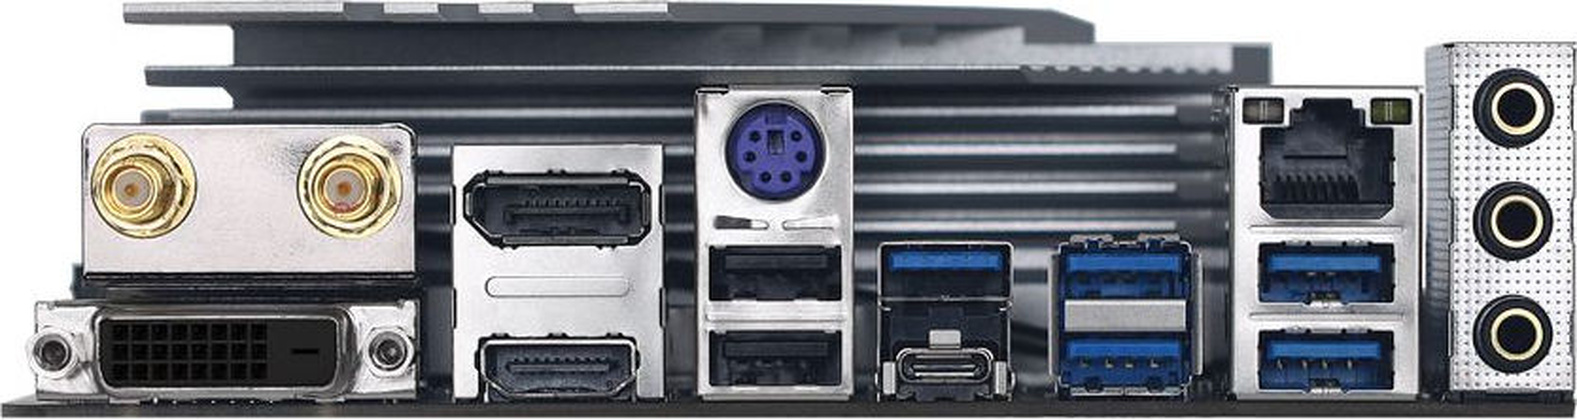 Мат.плата Biostar B550M-SILVER (AMD B550), mATX, DDR4, DVI/DP/HDMI [S-AM4]